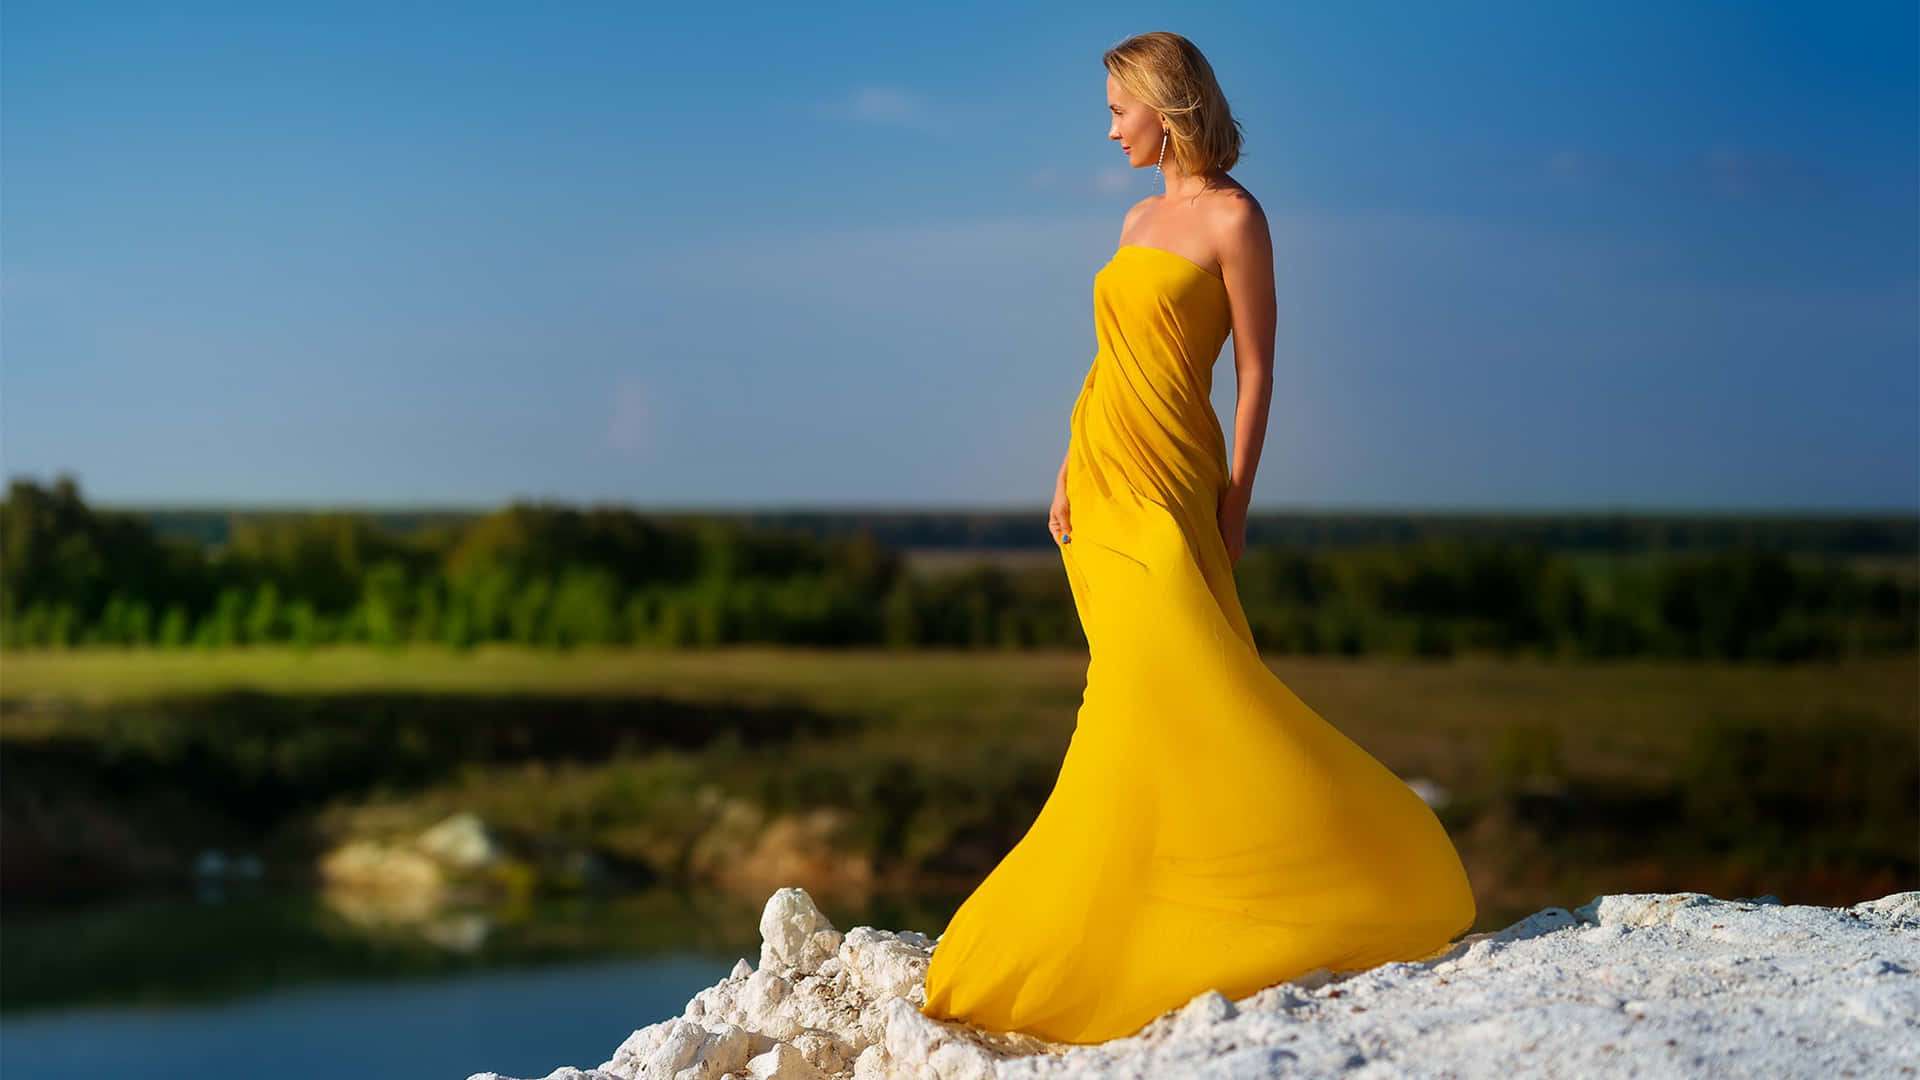 Elegant Woman in a Stylish Yellow Dress Wallpaper